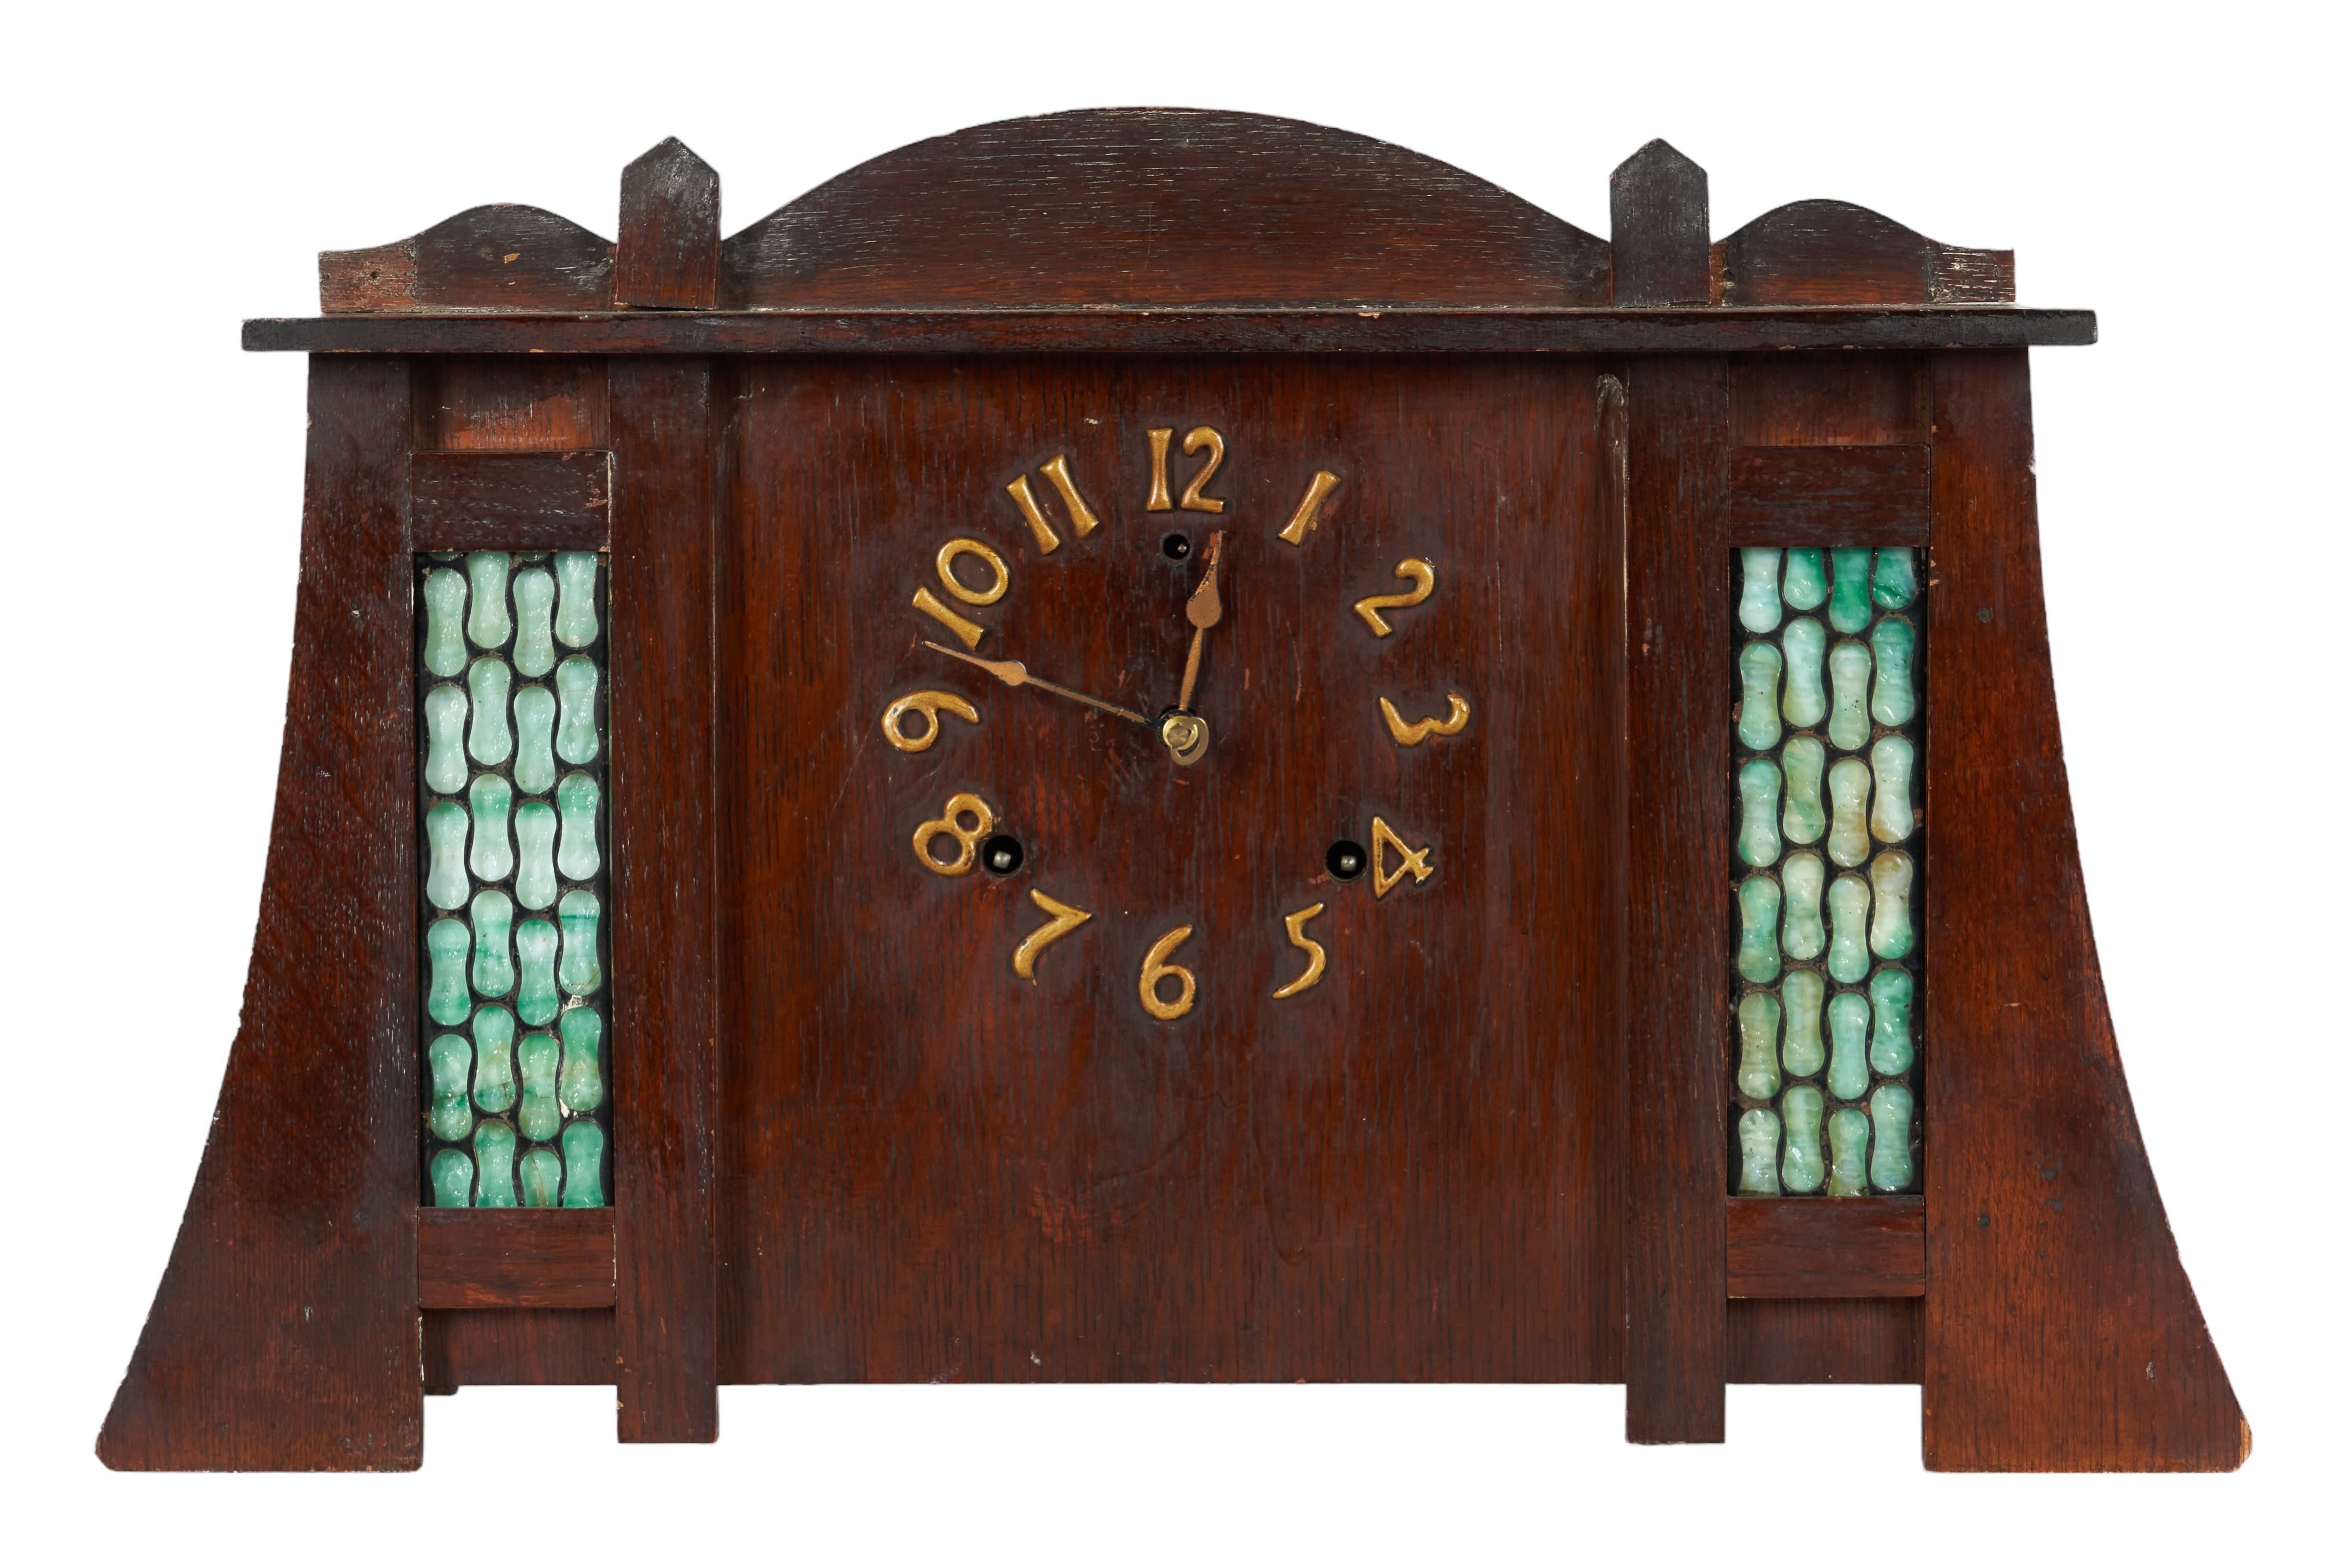 Wm. L. Gilbert Clock Co., Winsted,